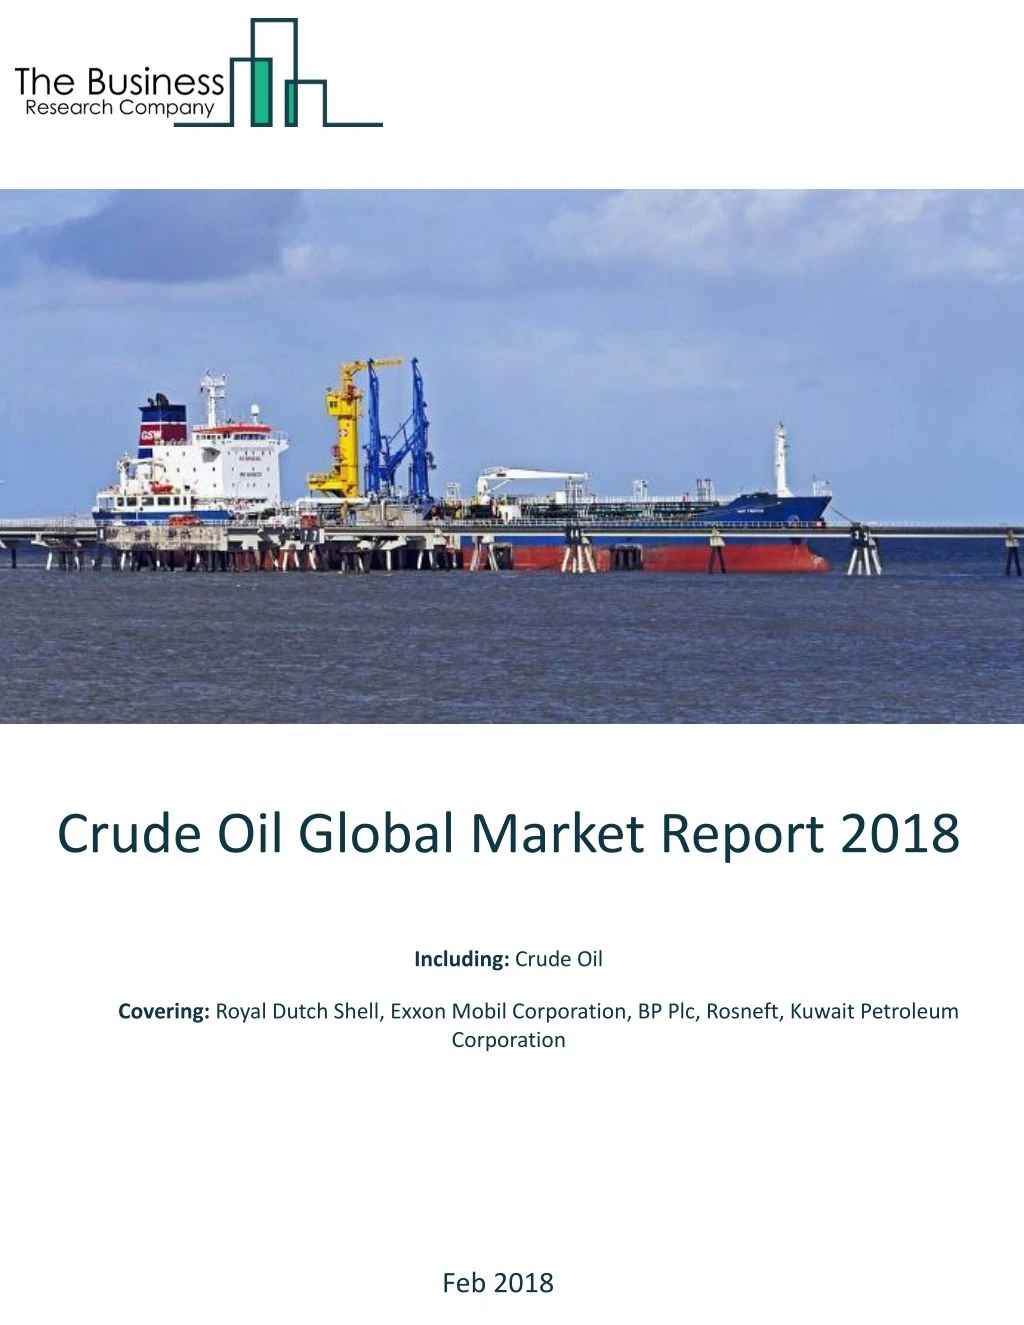 crude oil global market report 2018